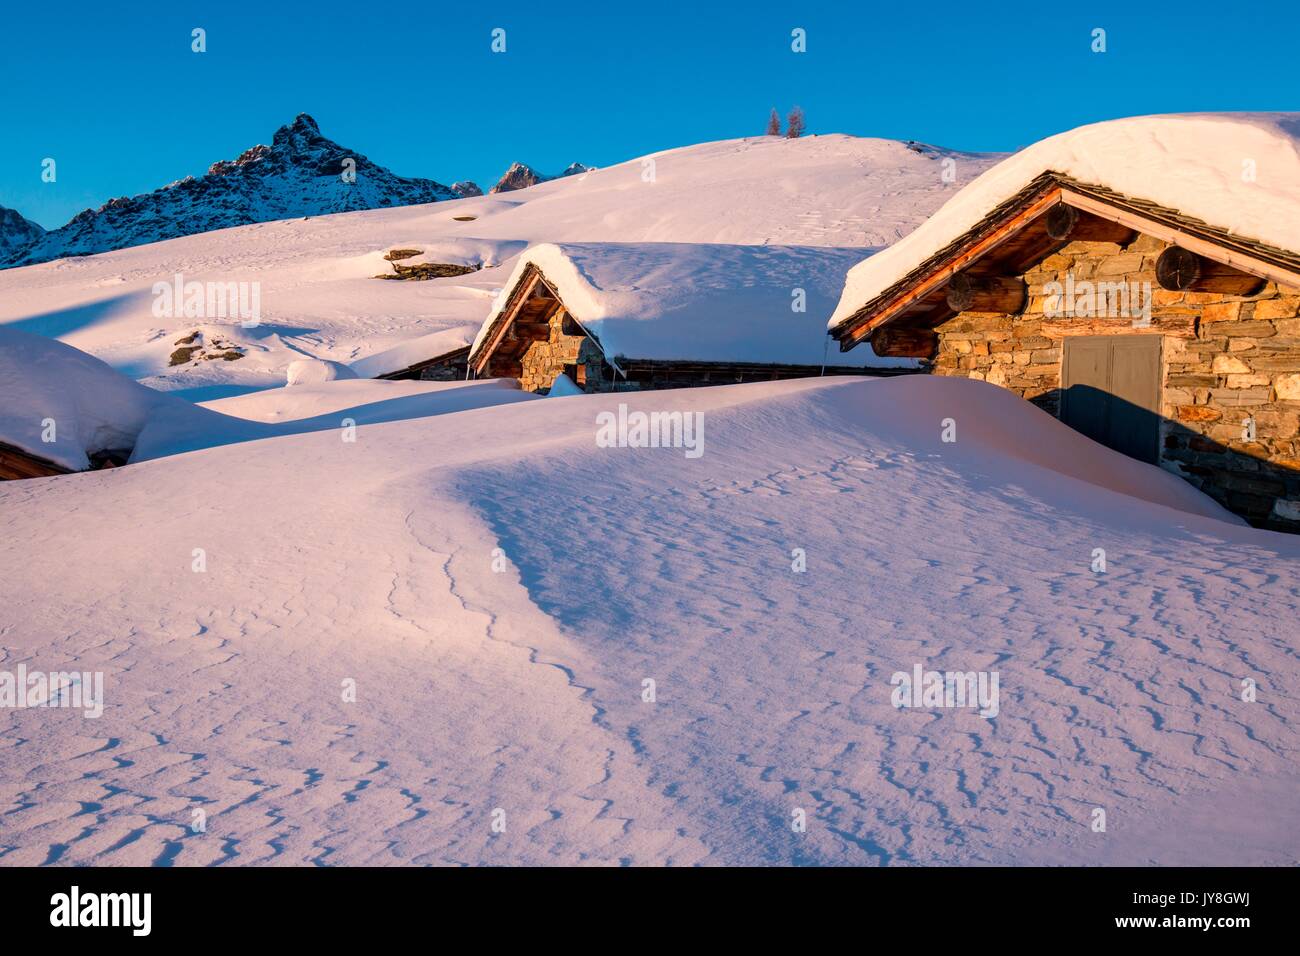 Huts at the Alpe Prabello, Prabello Alp at the sunset, Valmalenco, Valtellina, Italy Stock Photo